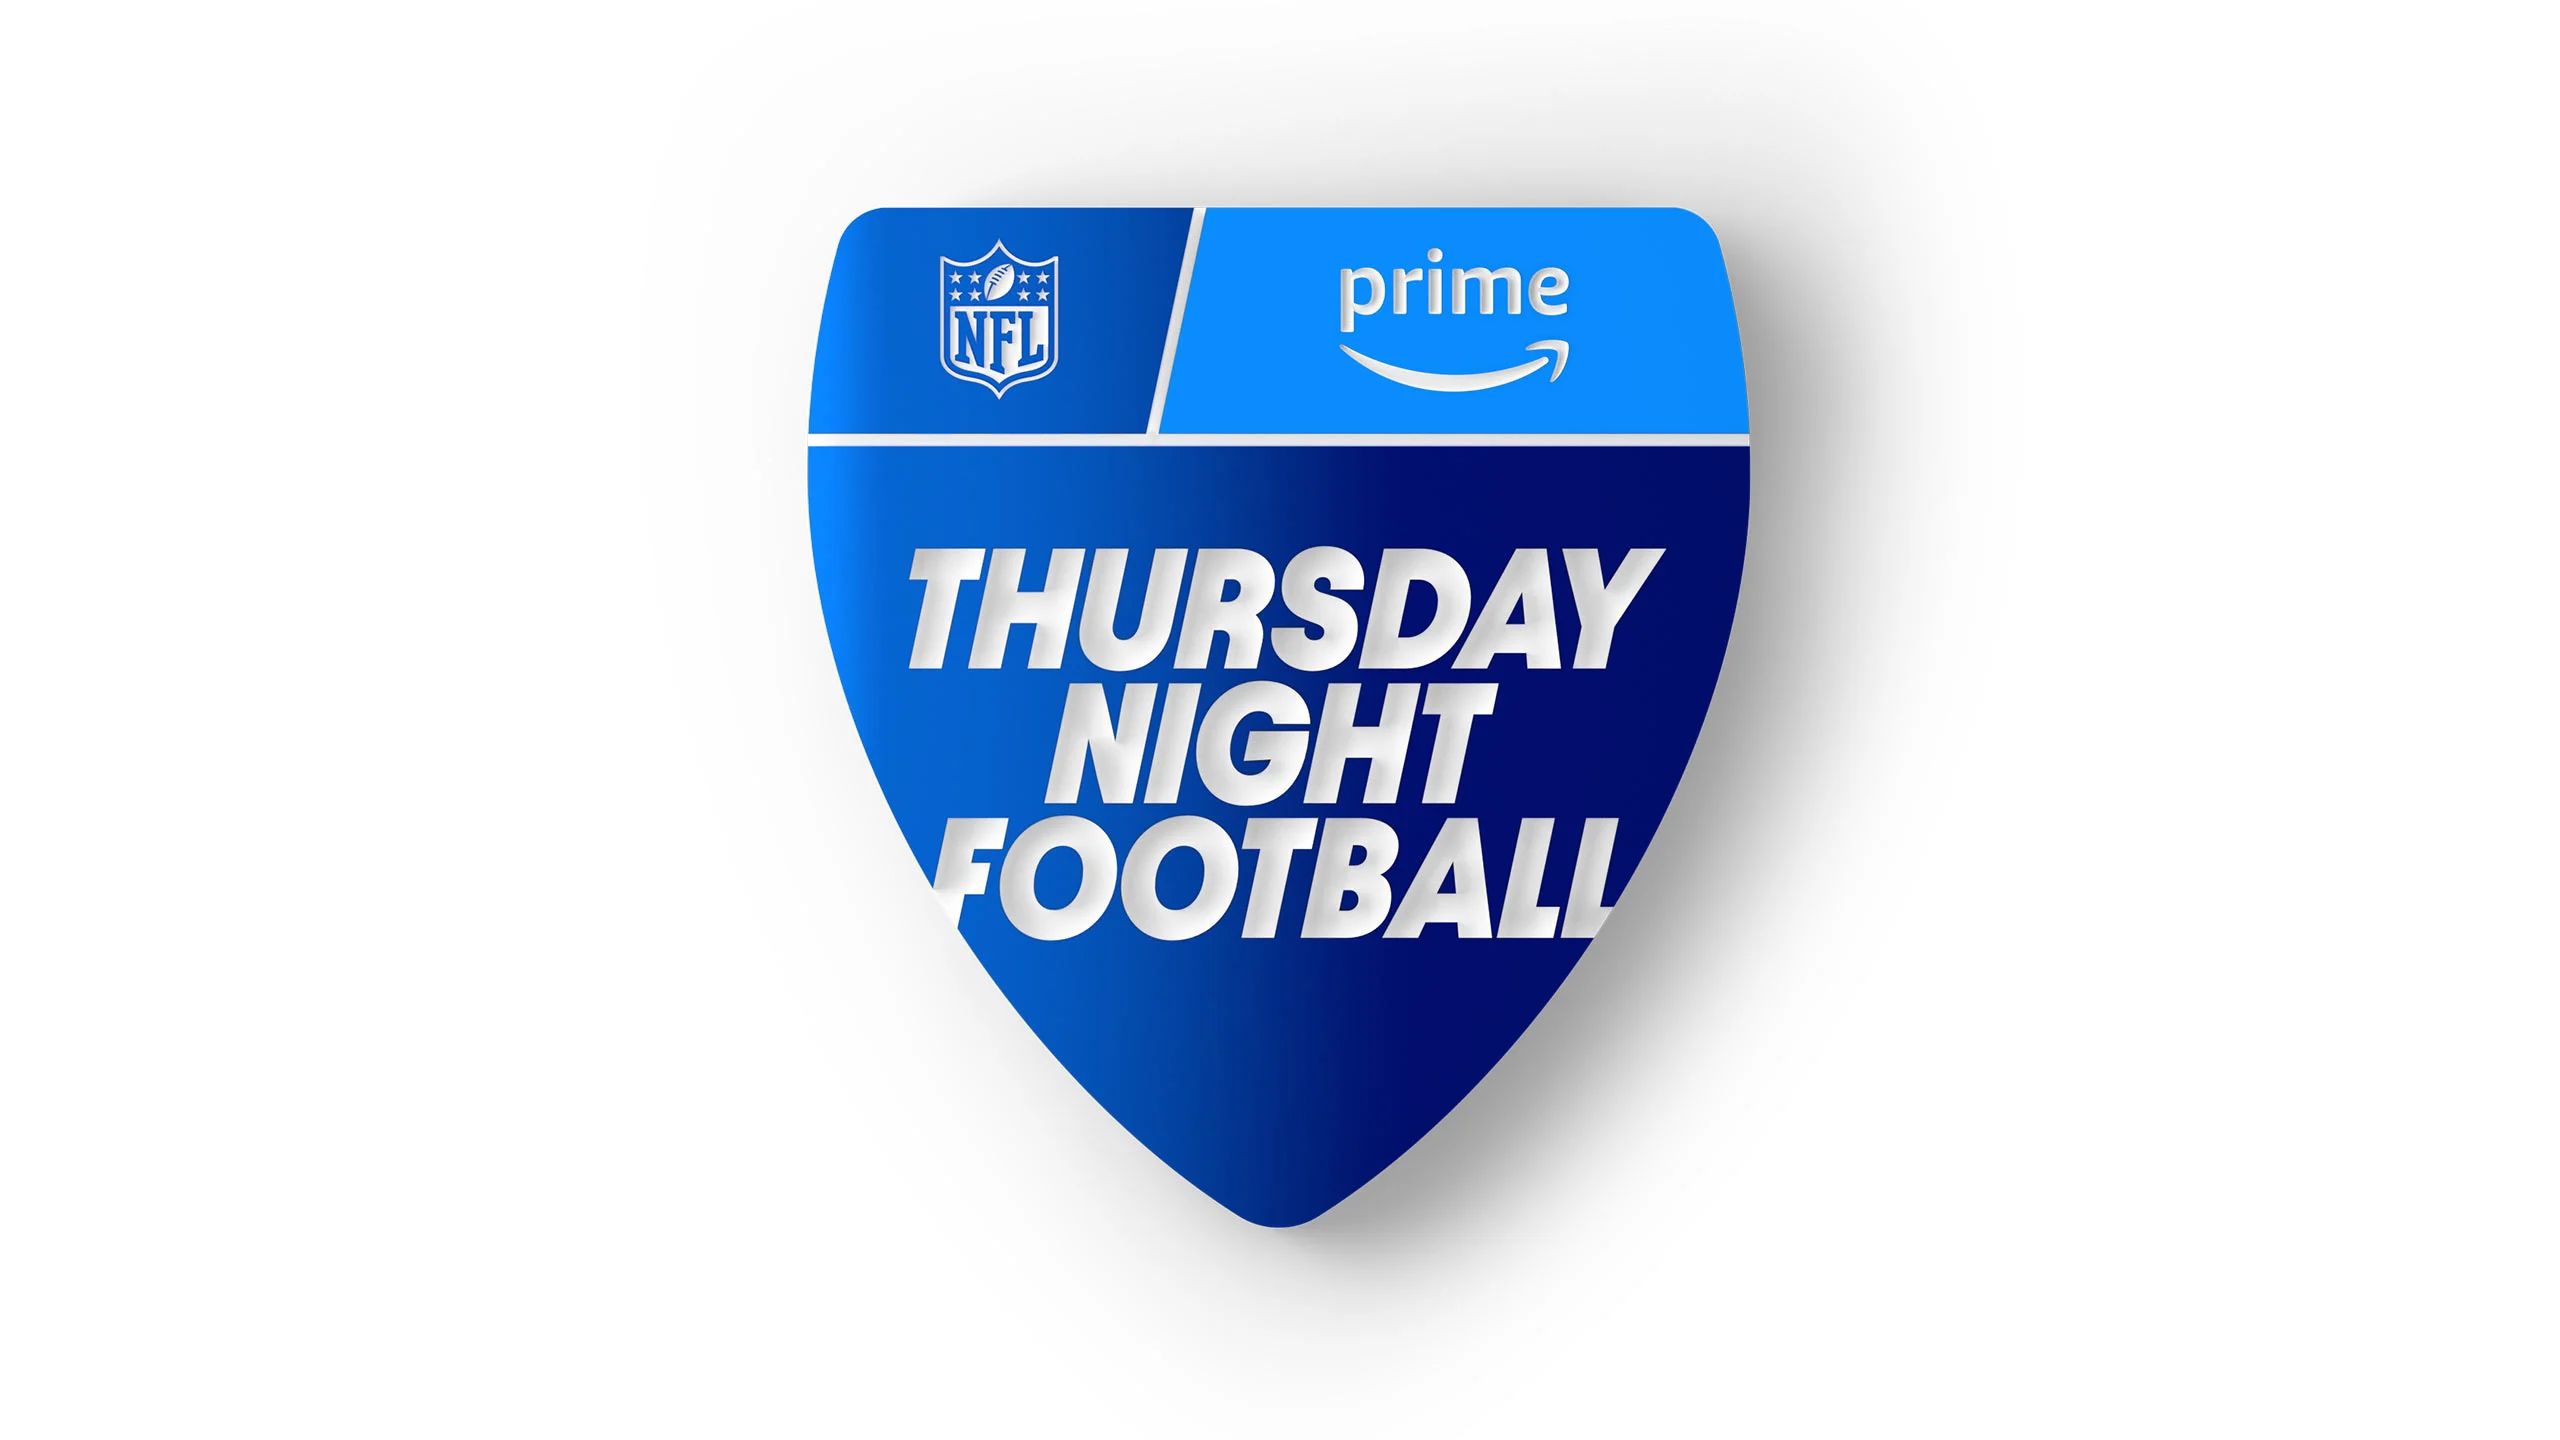 Watch Monday Night Football online